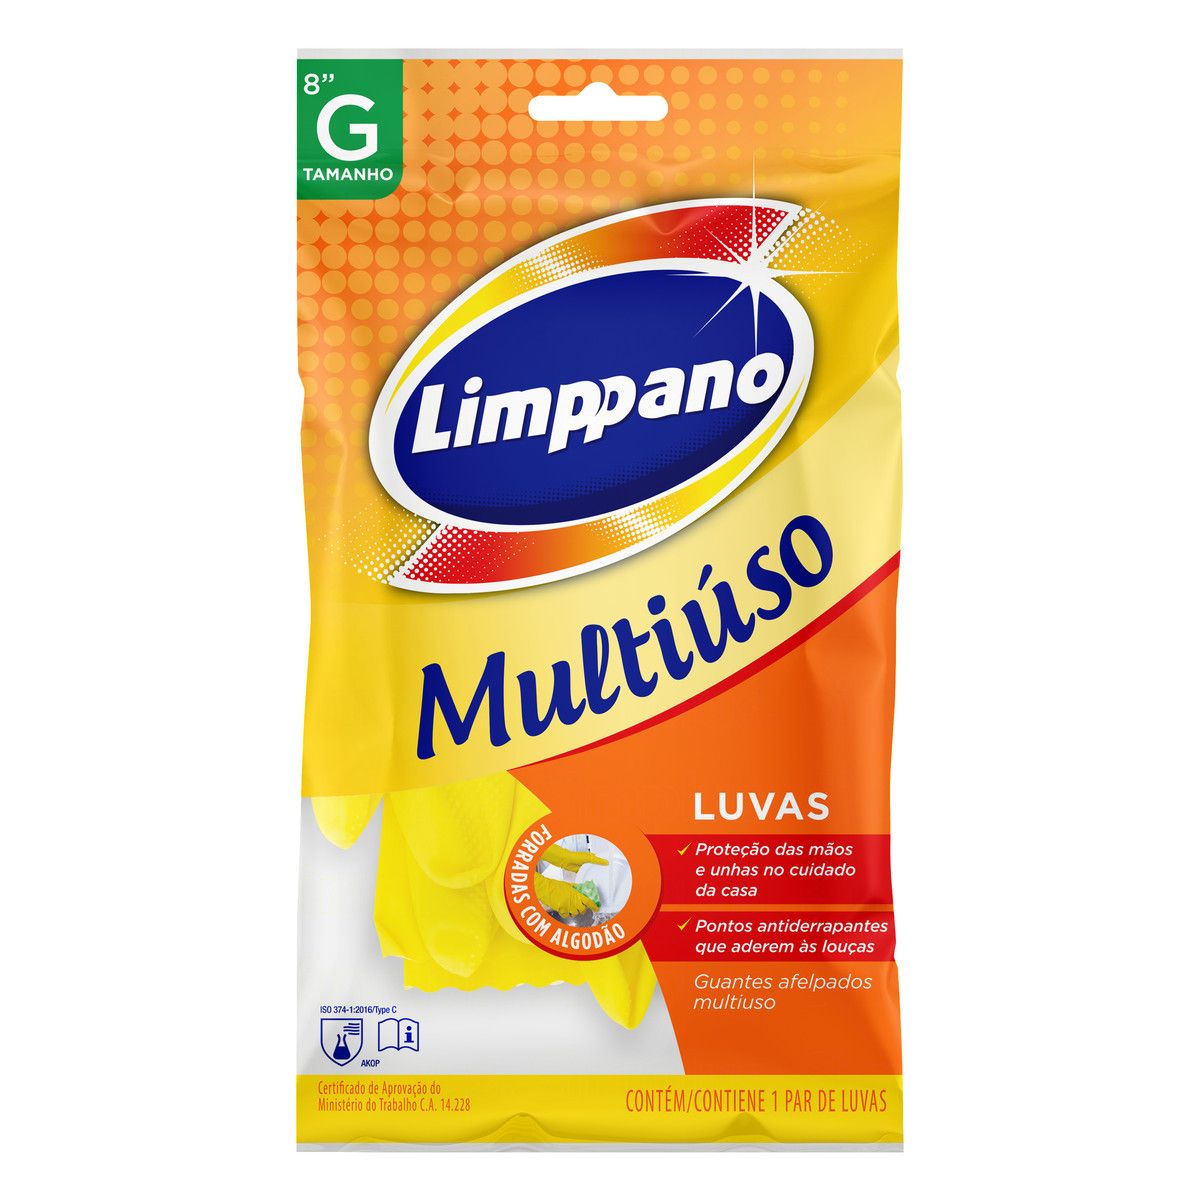 Luva Multiuso Amarela Limppano Tamanho G image number 0